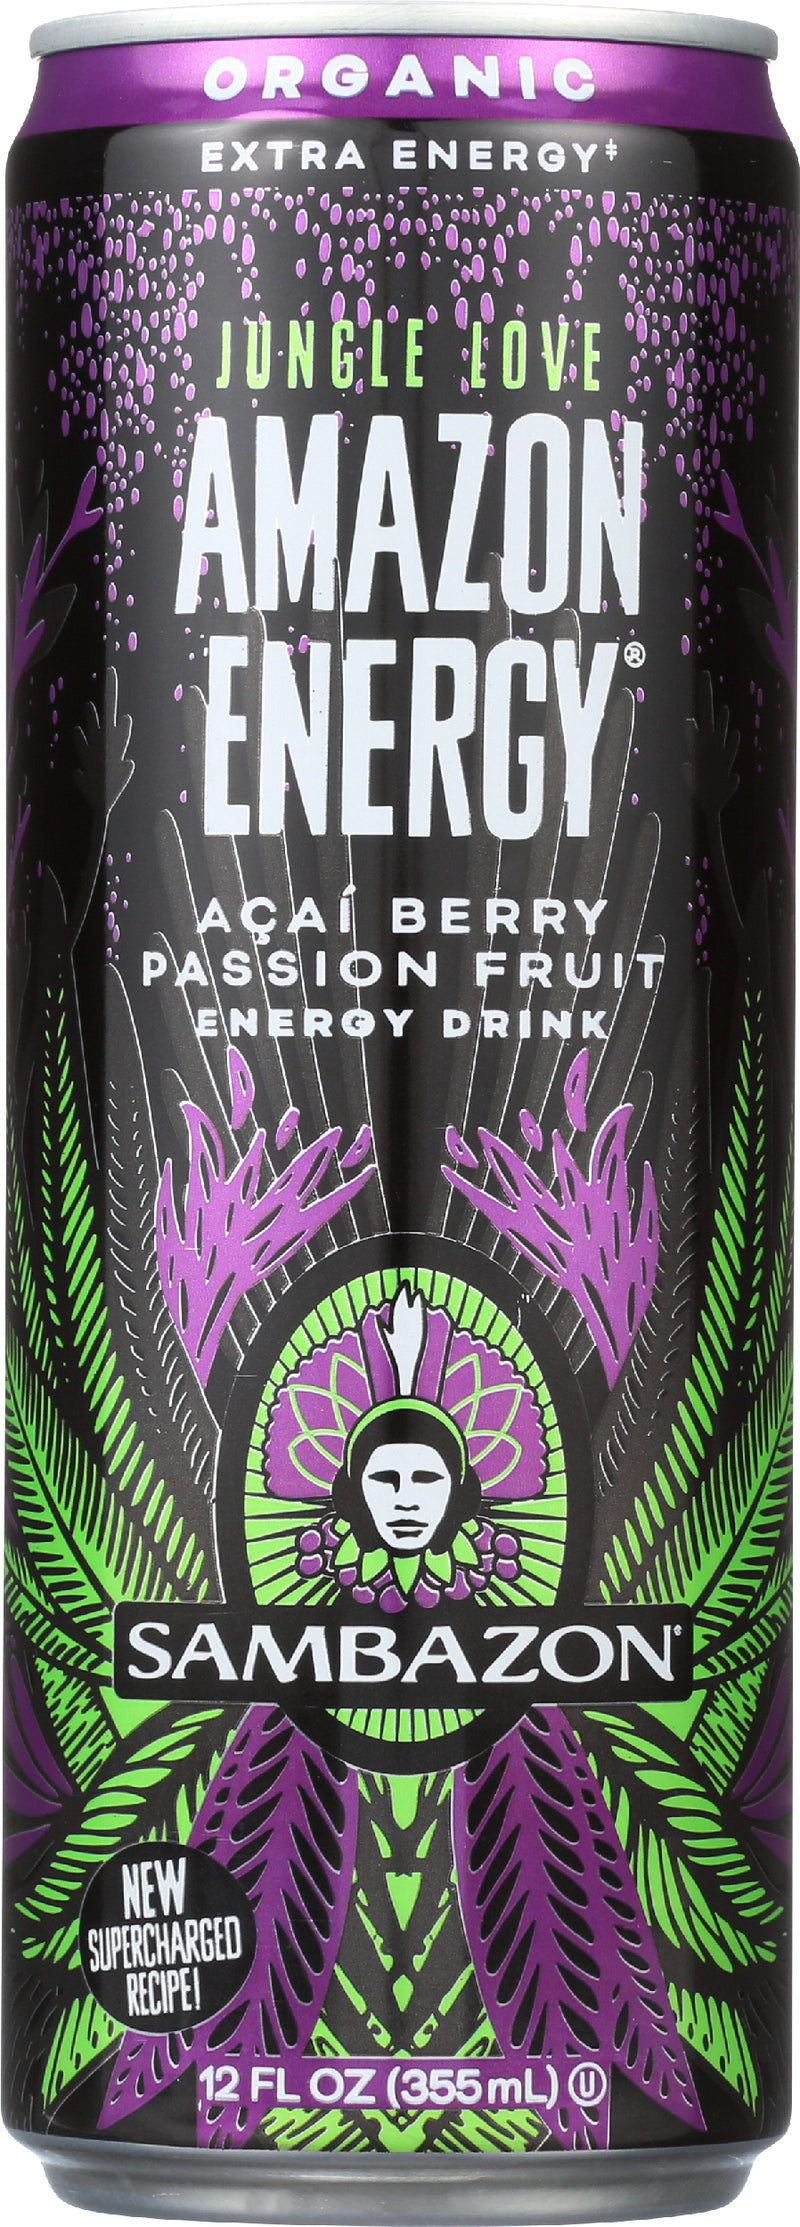 Sambazon Jungle Love Amazon Energy Acai Berry Passionfruit Energy Drink Organic 12 Fluid Ounce - 12 Per Case.